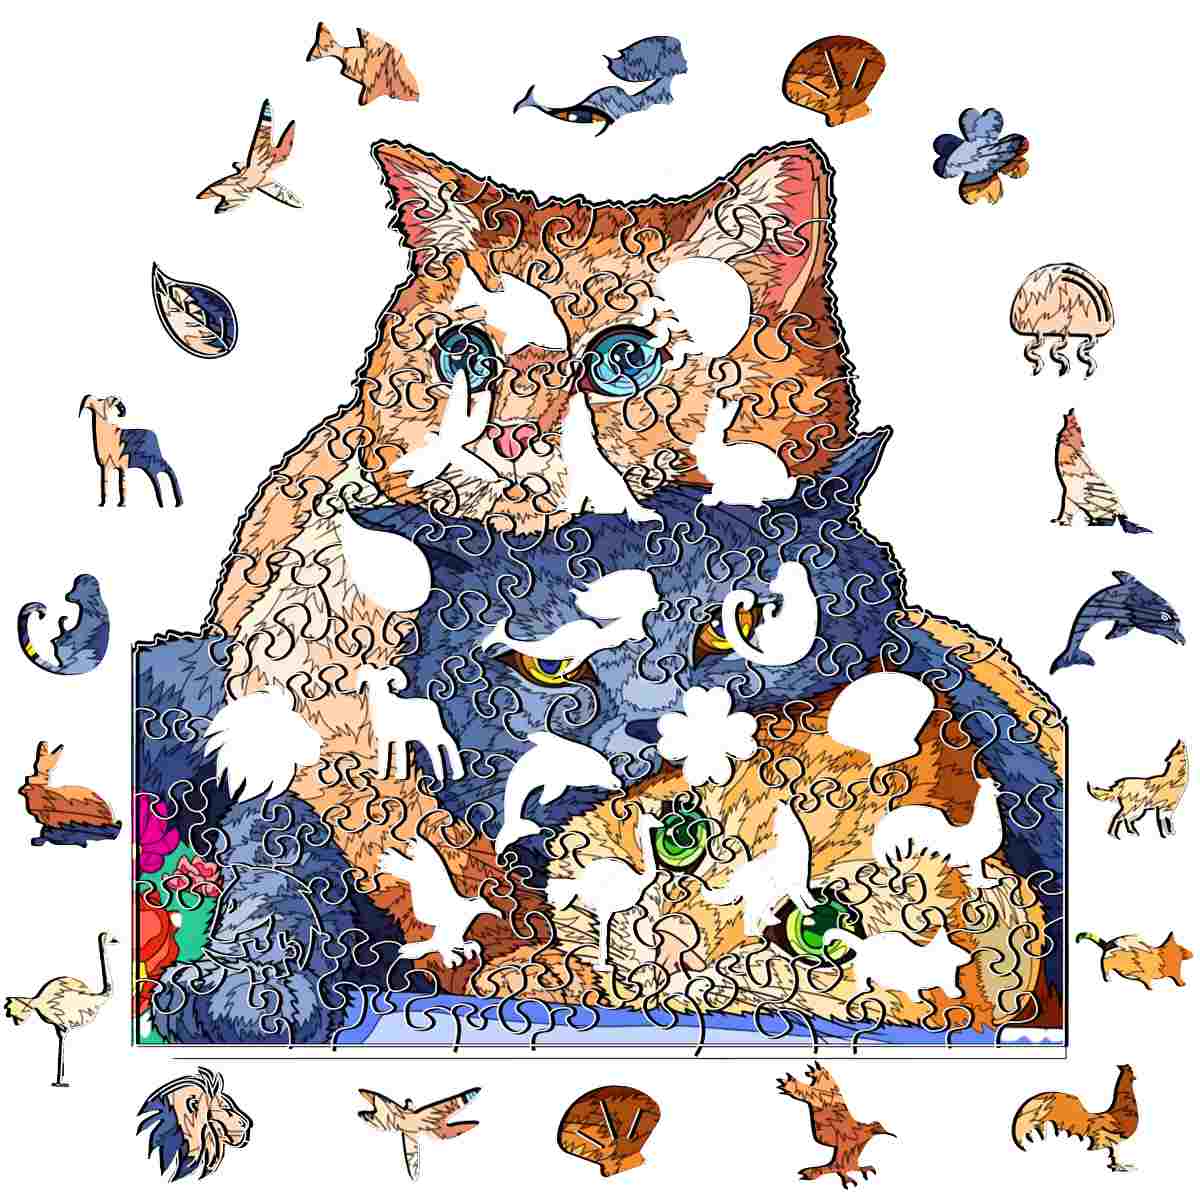 Tri-Cats - Jigsaw Puzzle